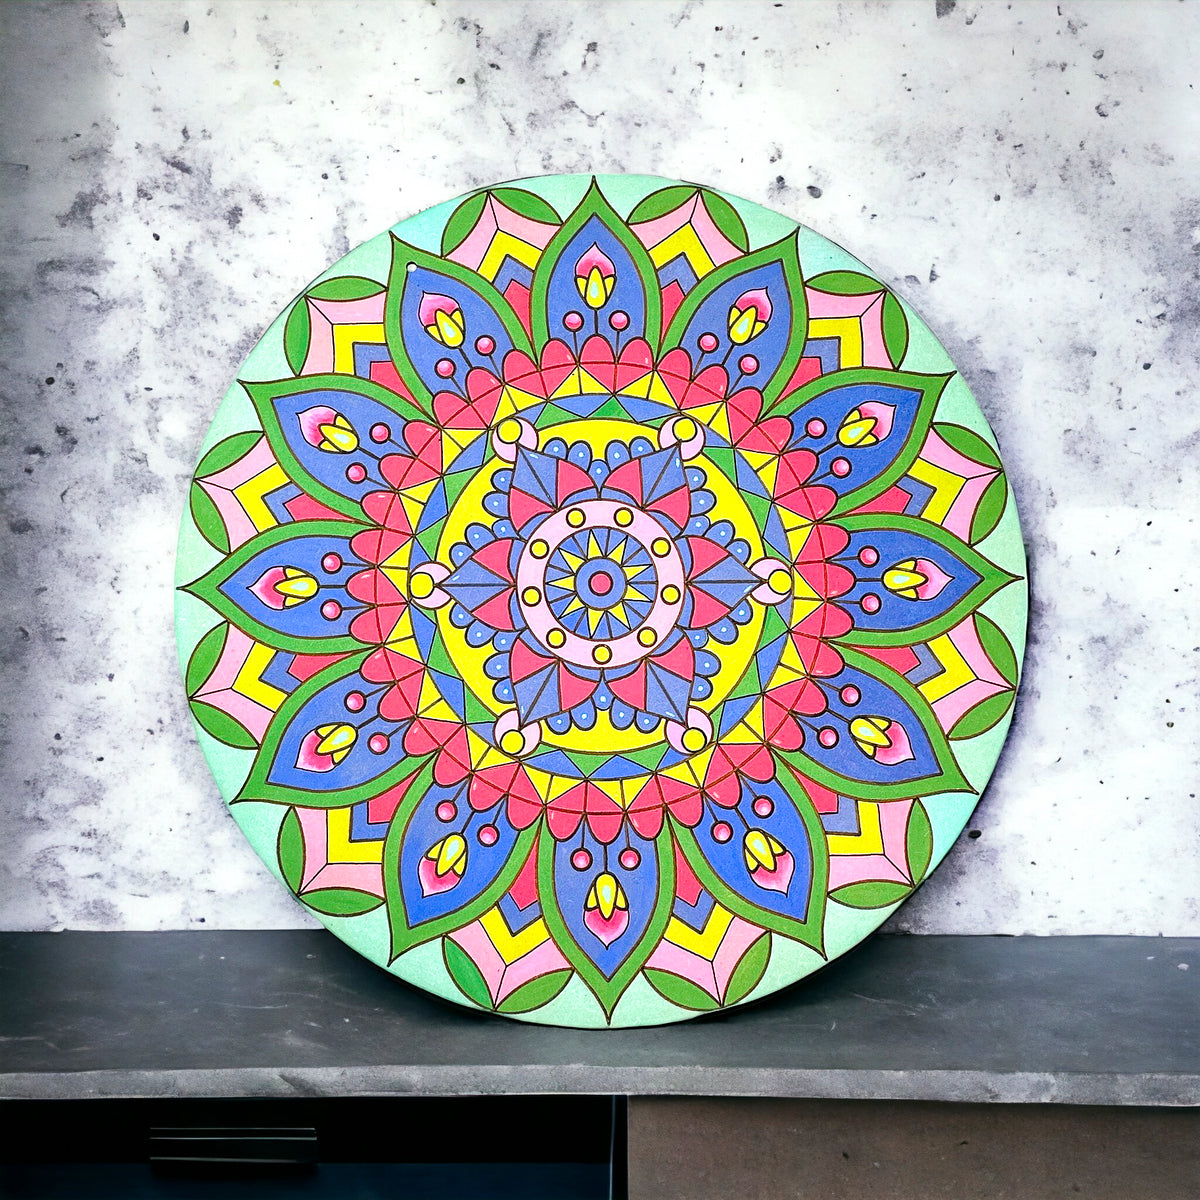  Imagimake Mandala Art Kit, Watercolor Paint Set